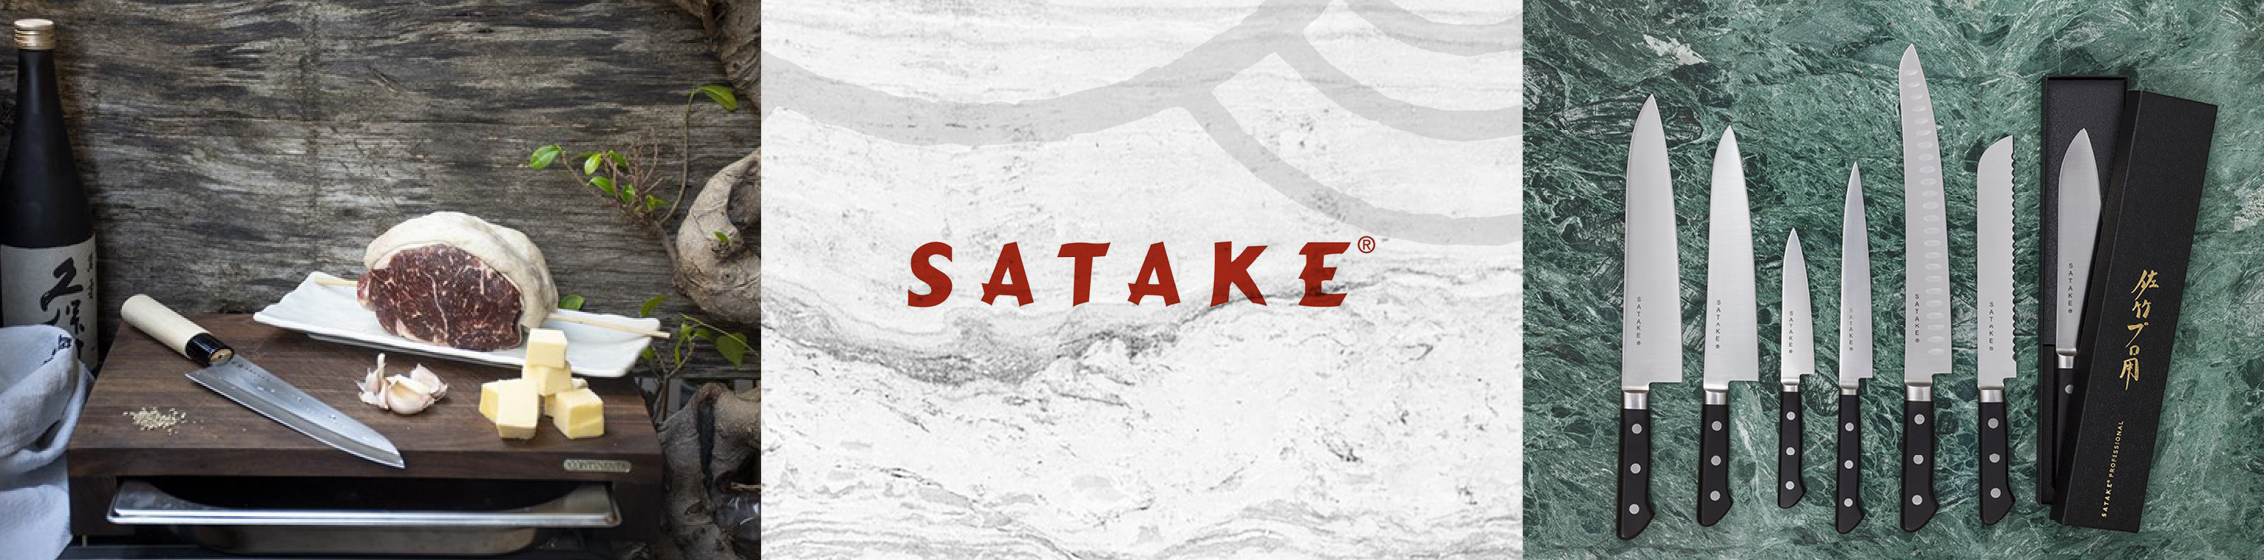 Satake